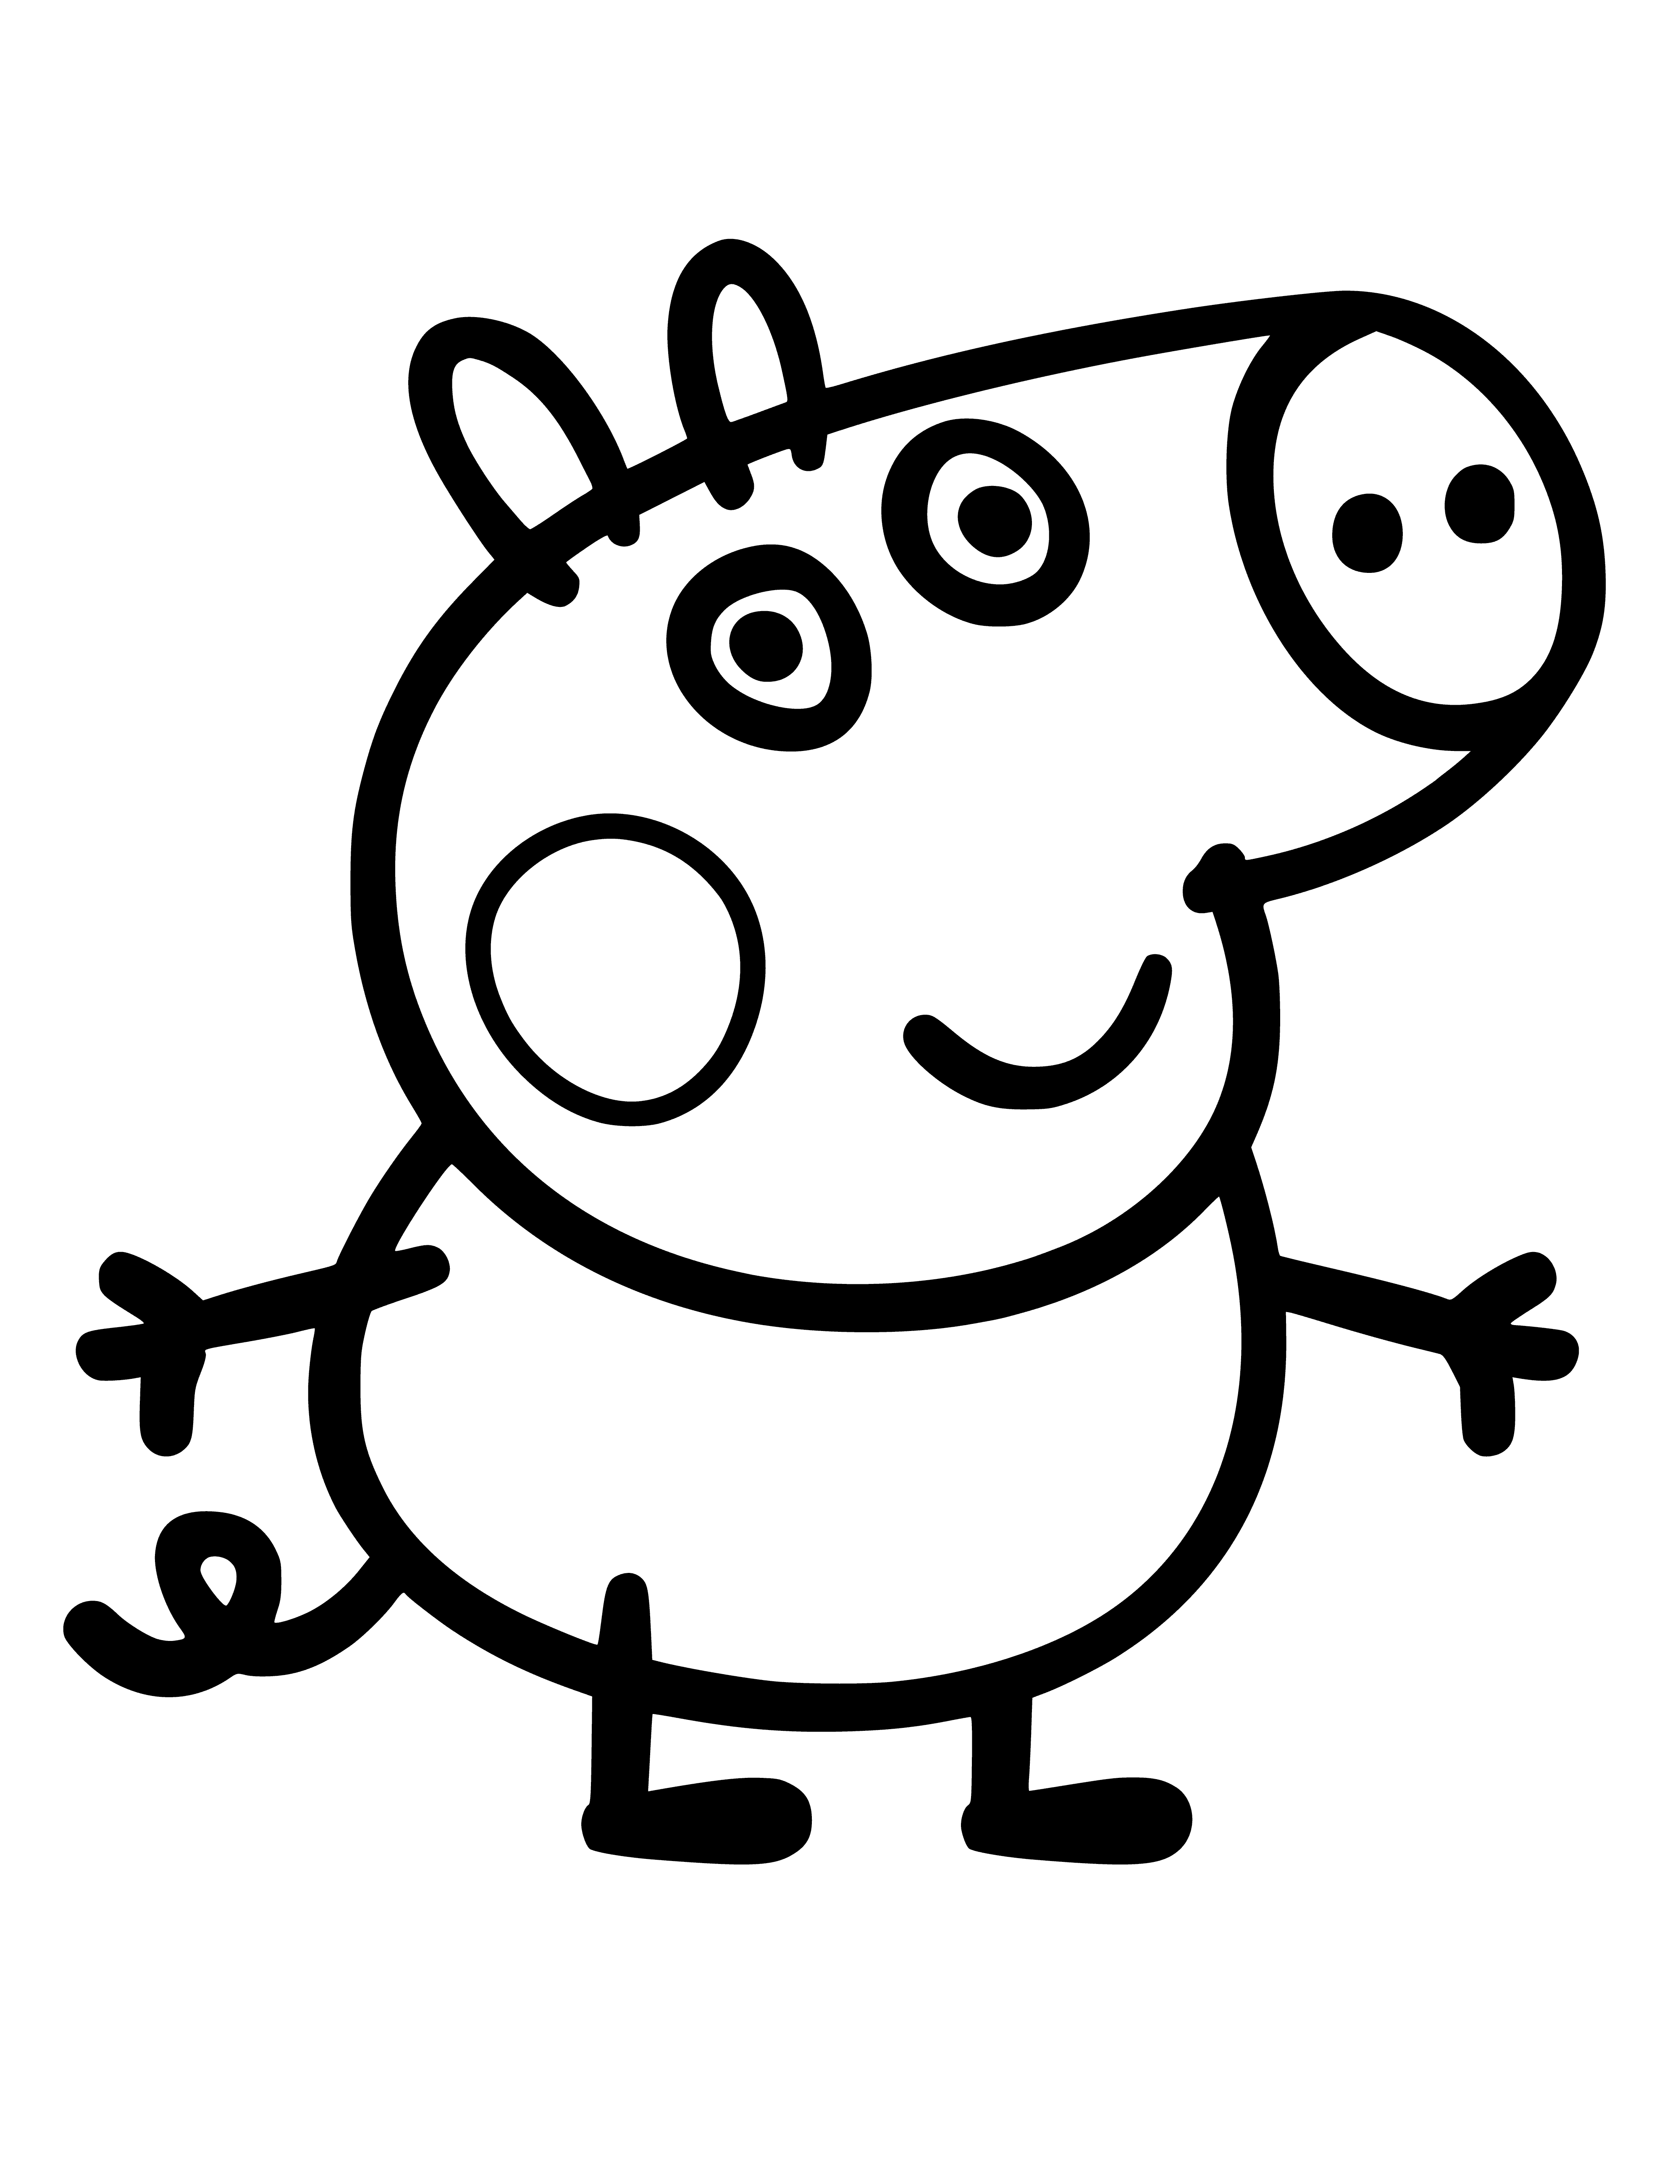 Pig George coloring page